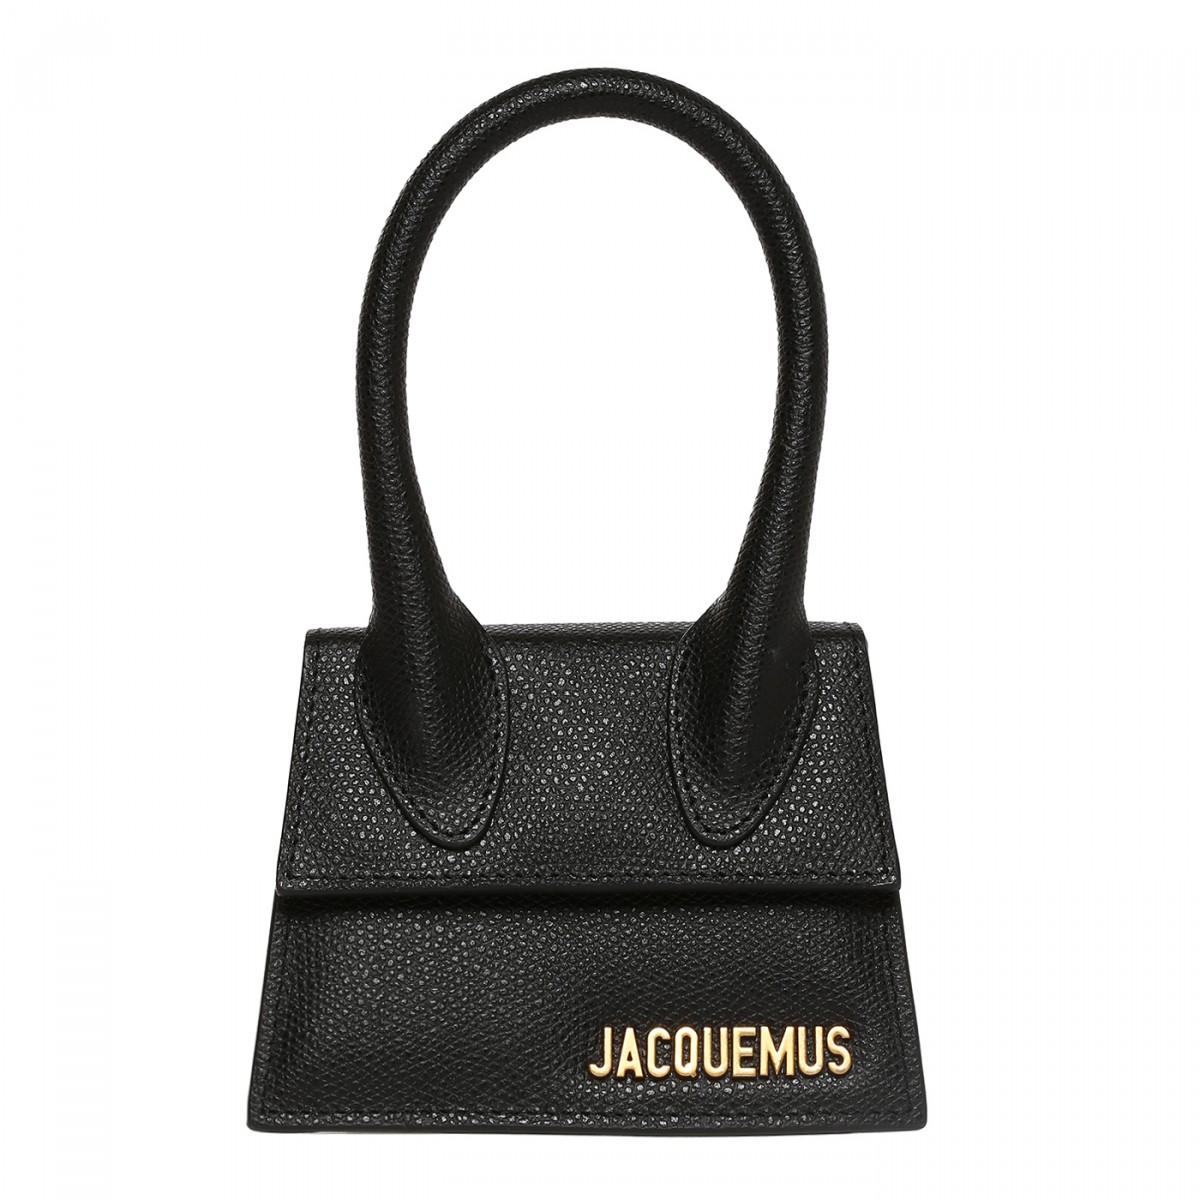 Jacquemus Leather Le Chiquito Mini Bag in Black - Lyst